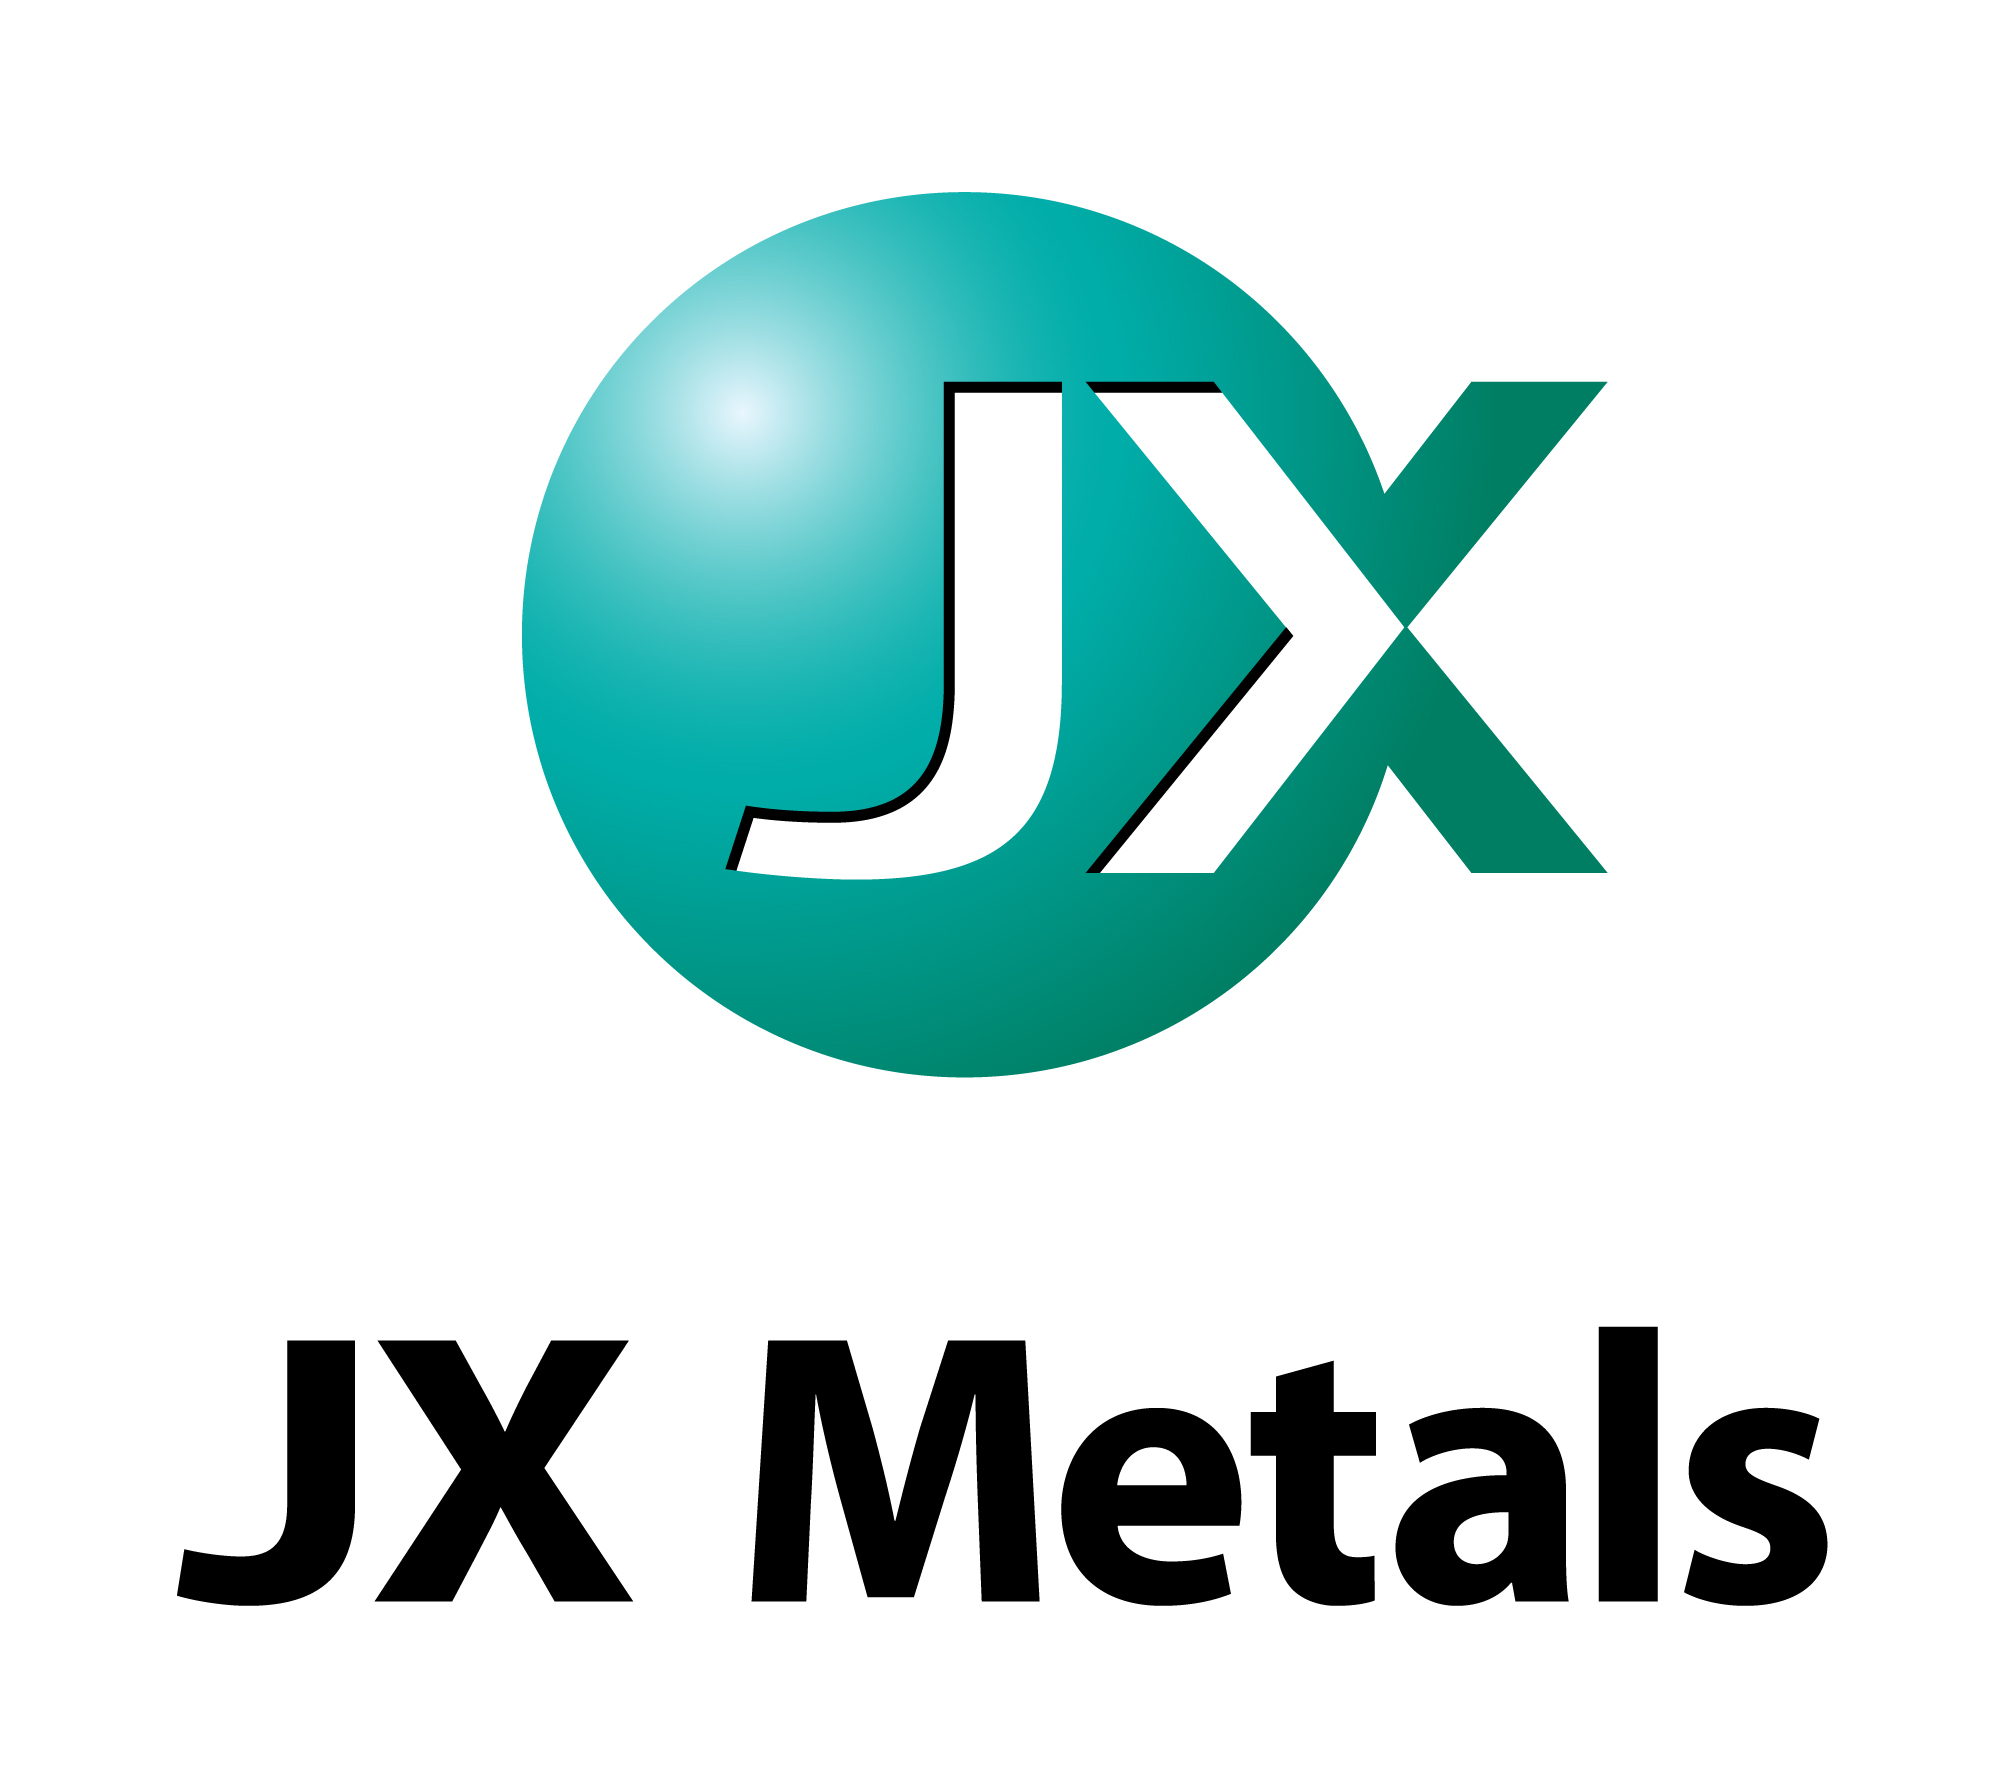 JX Metals Corporation